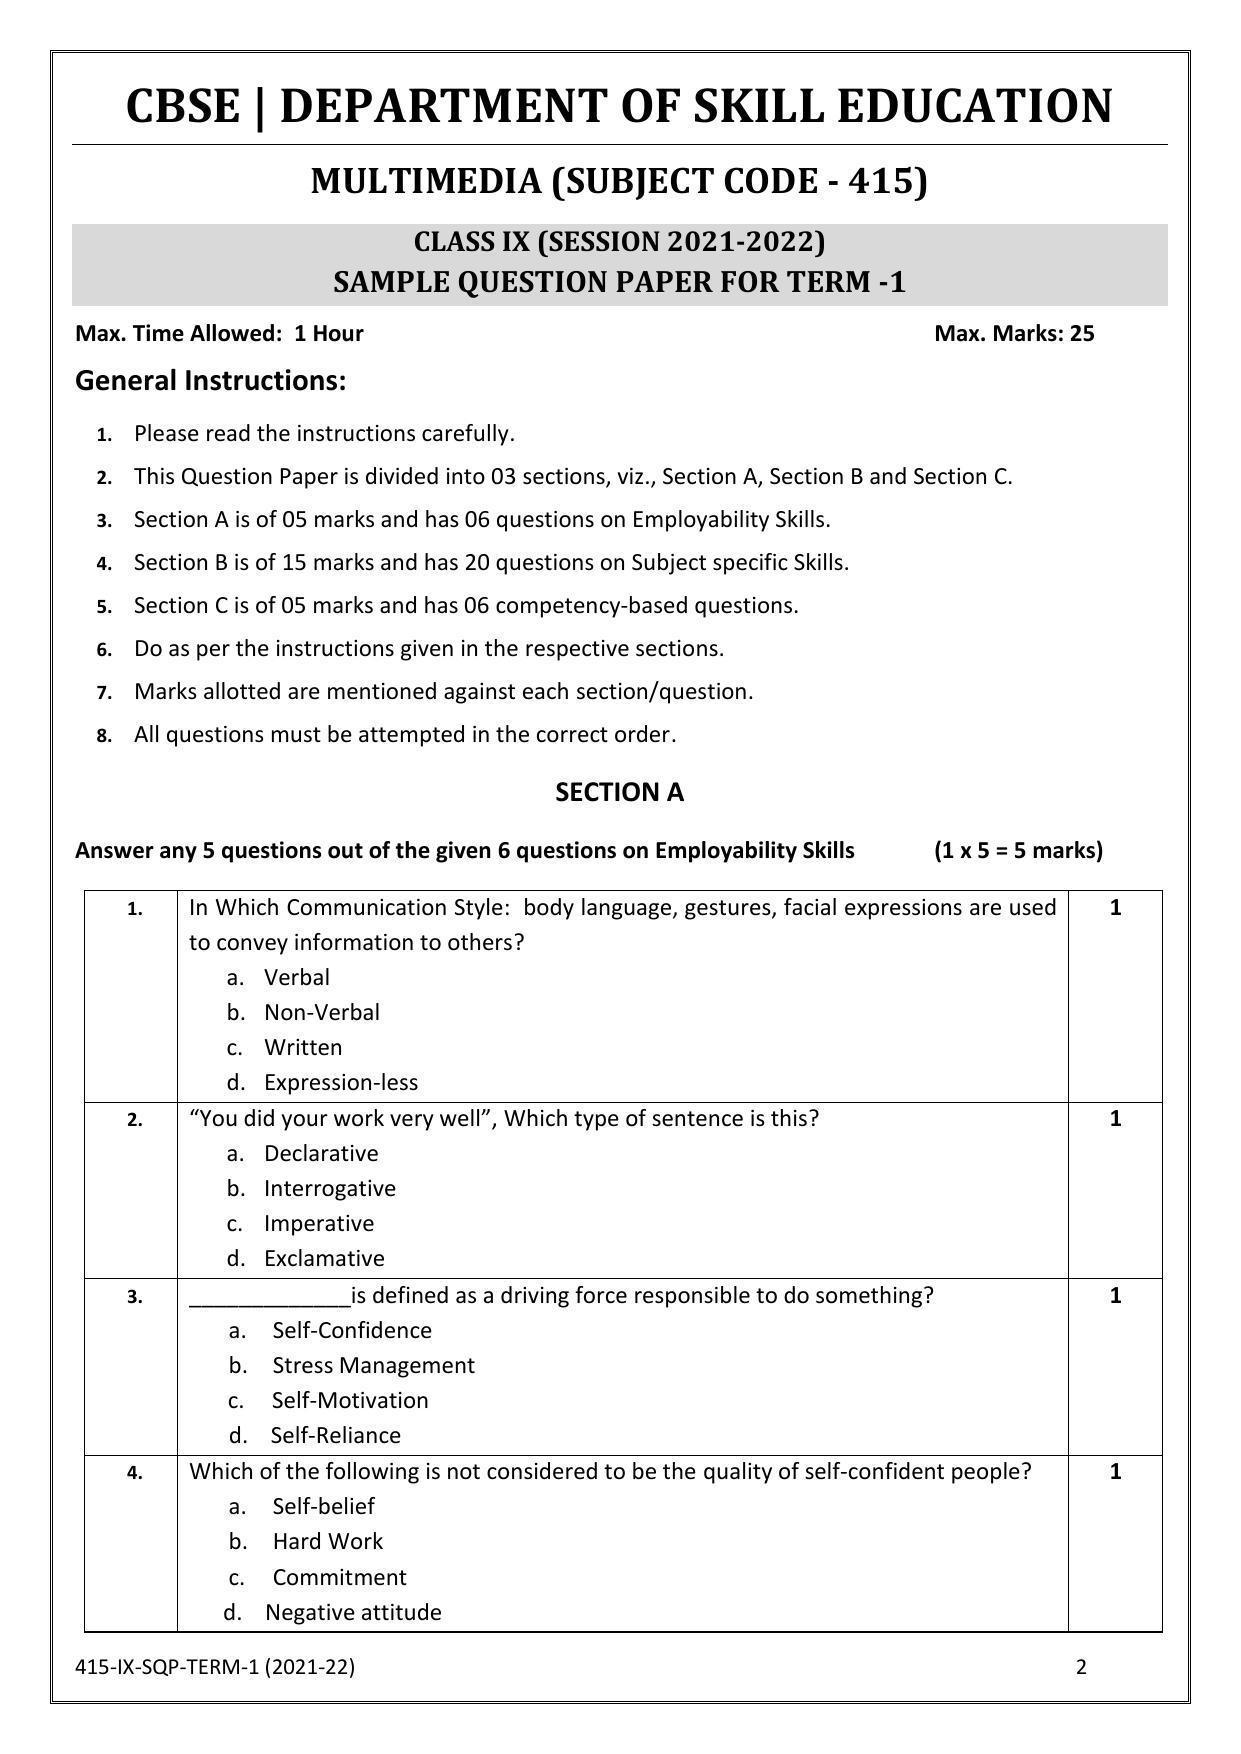 CBSE Class 10 Skill Education (Term I) - Multi Media Sample Paper 2021-22 - Page 2